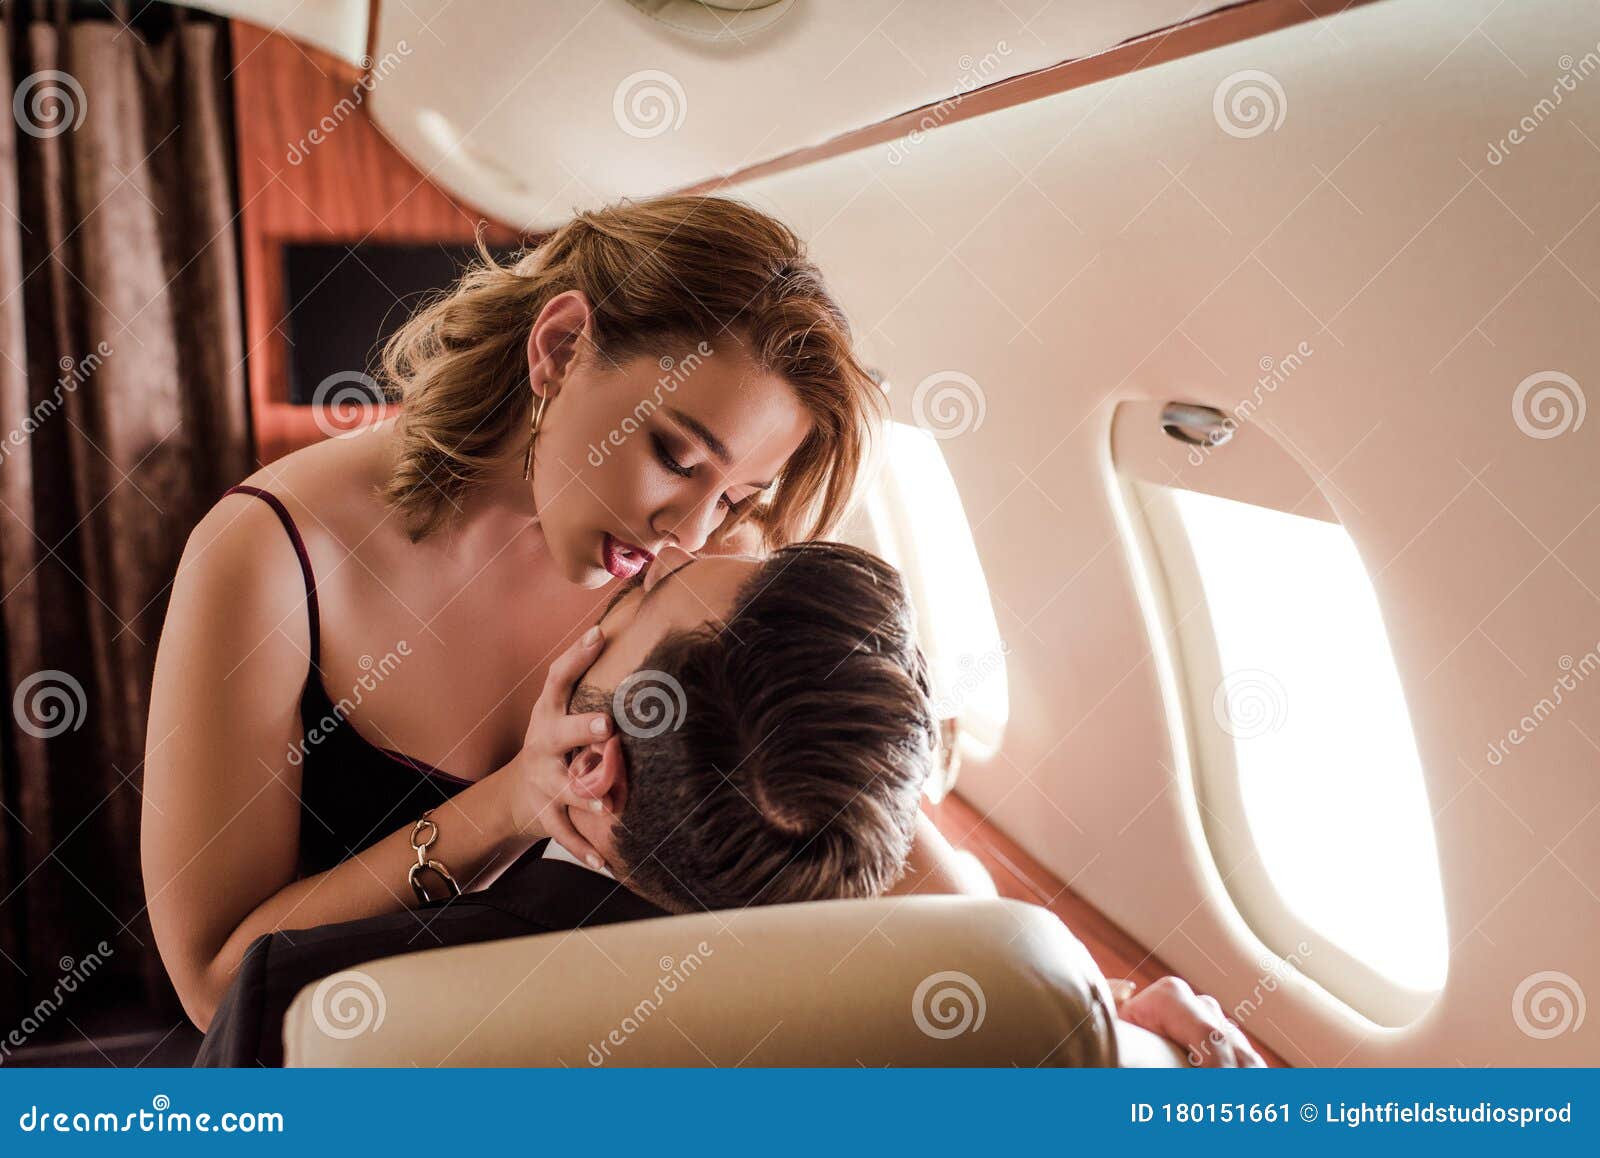 alexus raffington add sexy women kissing men photo